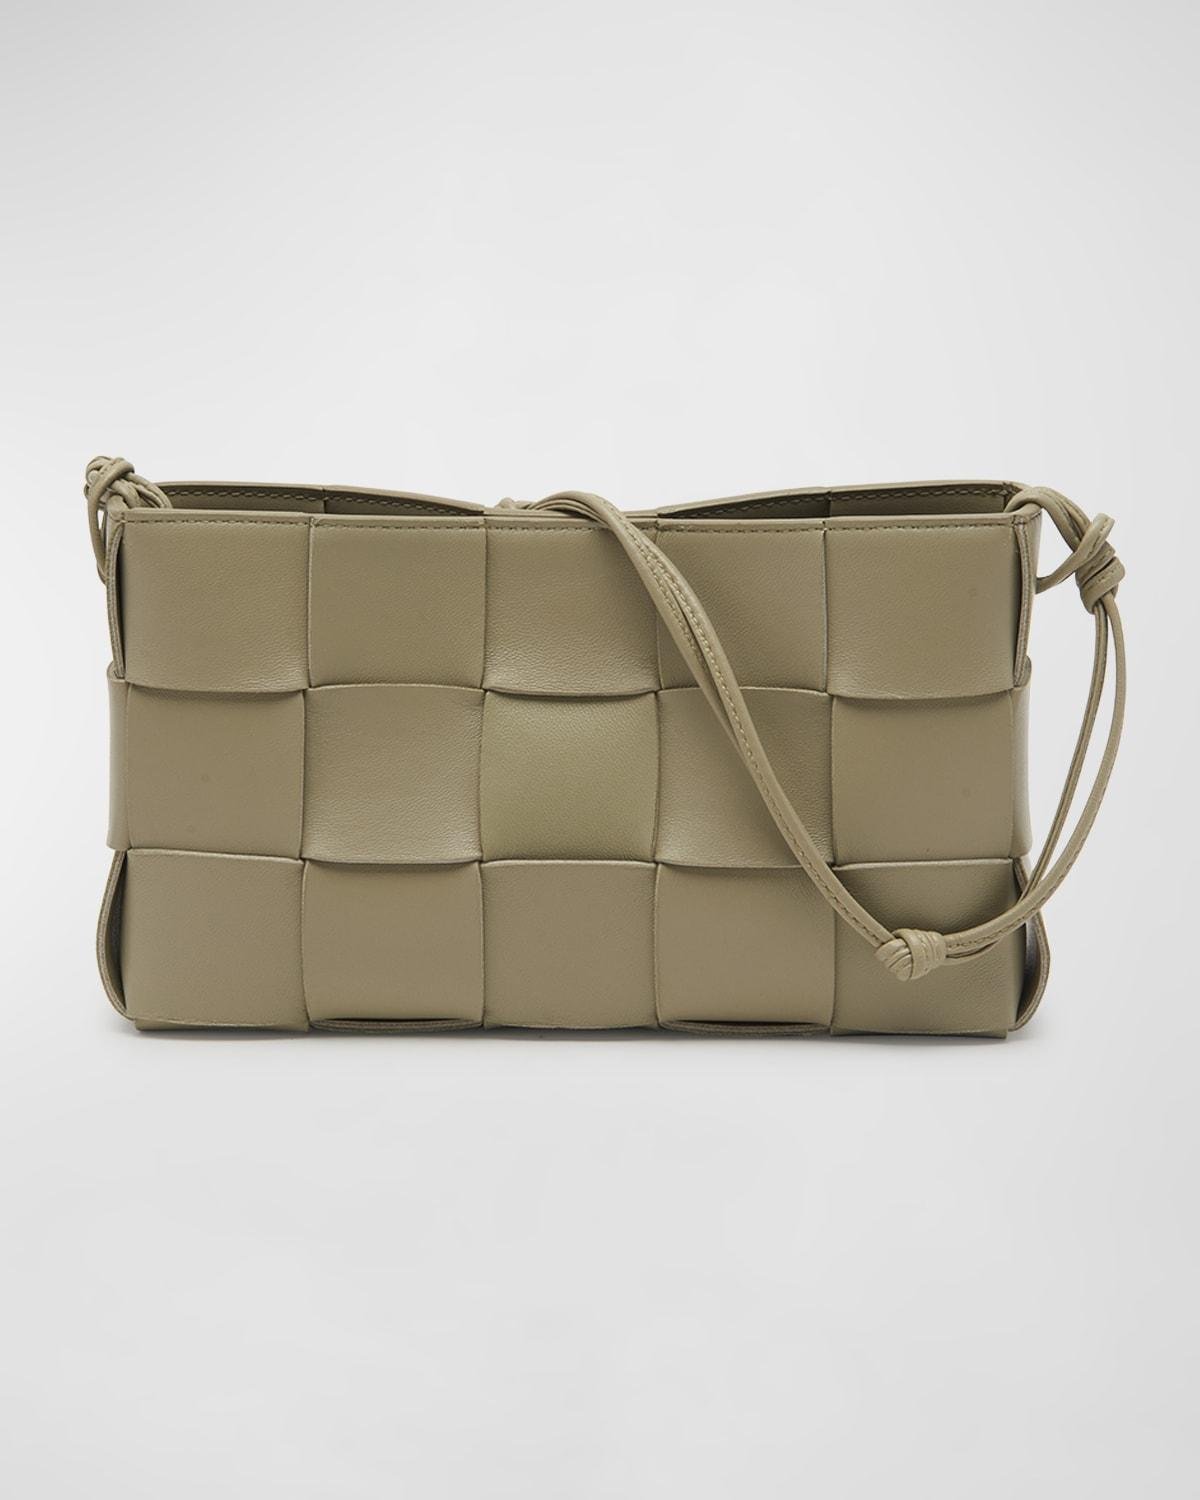 Bottega Veneta Cassette Intrecciato Leather Shoulder Bag in Natural